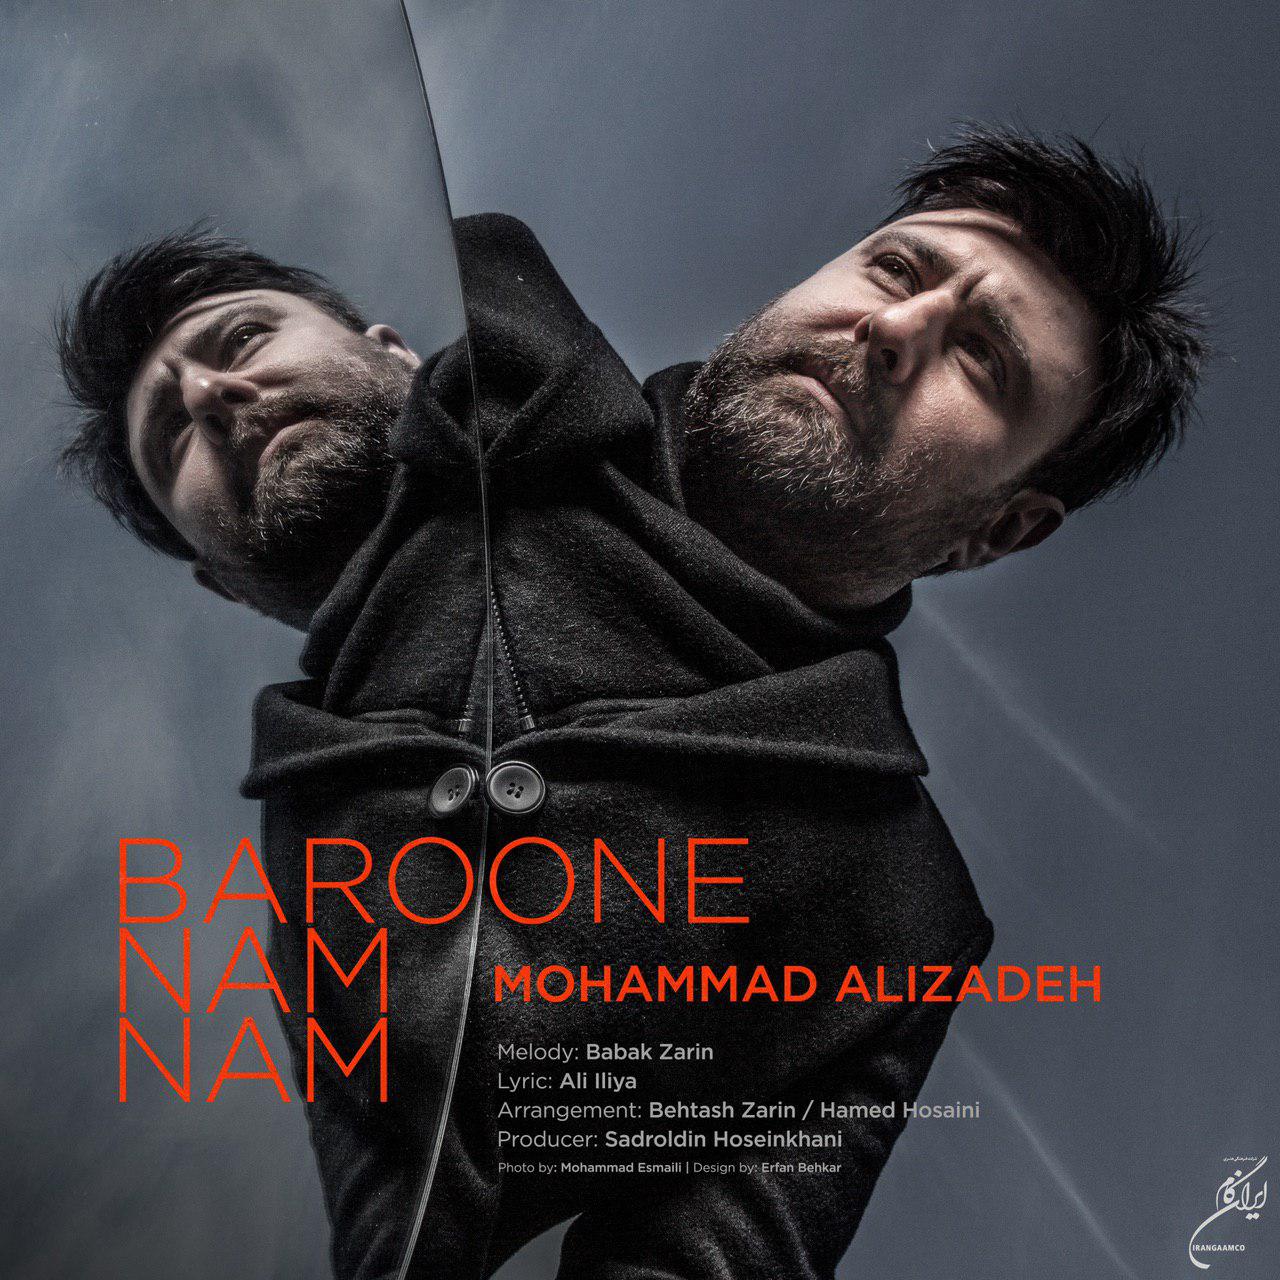 Mohammad Alizadeh - Baroon Nam Nam 